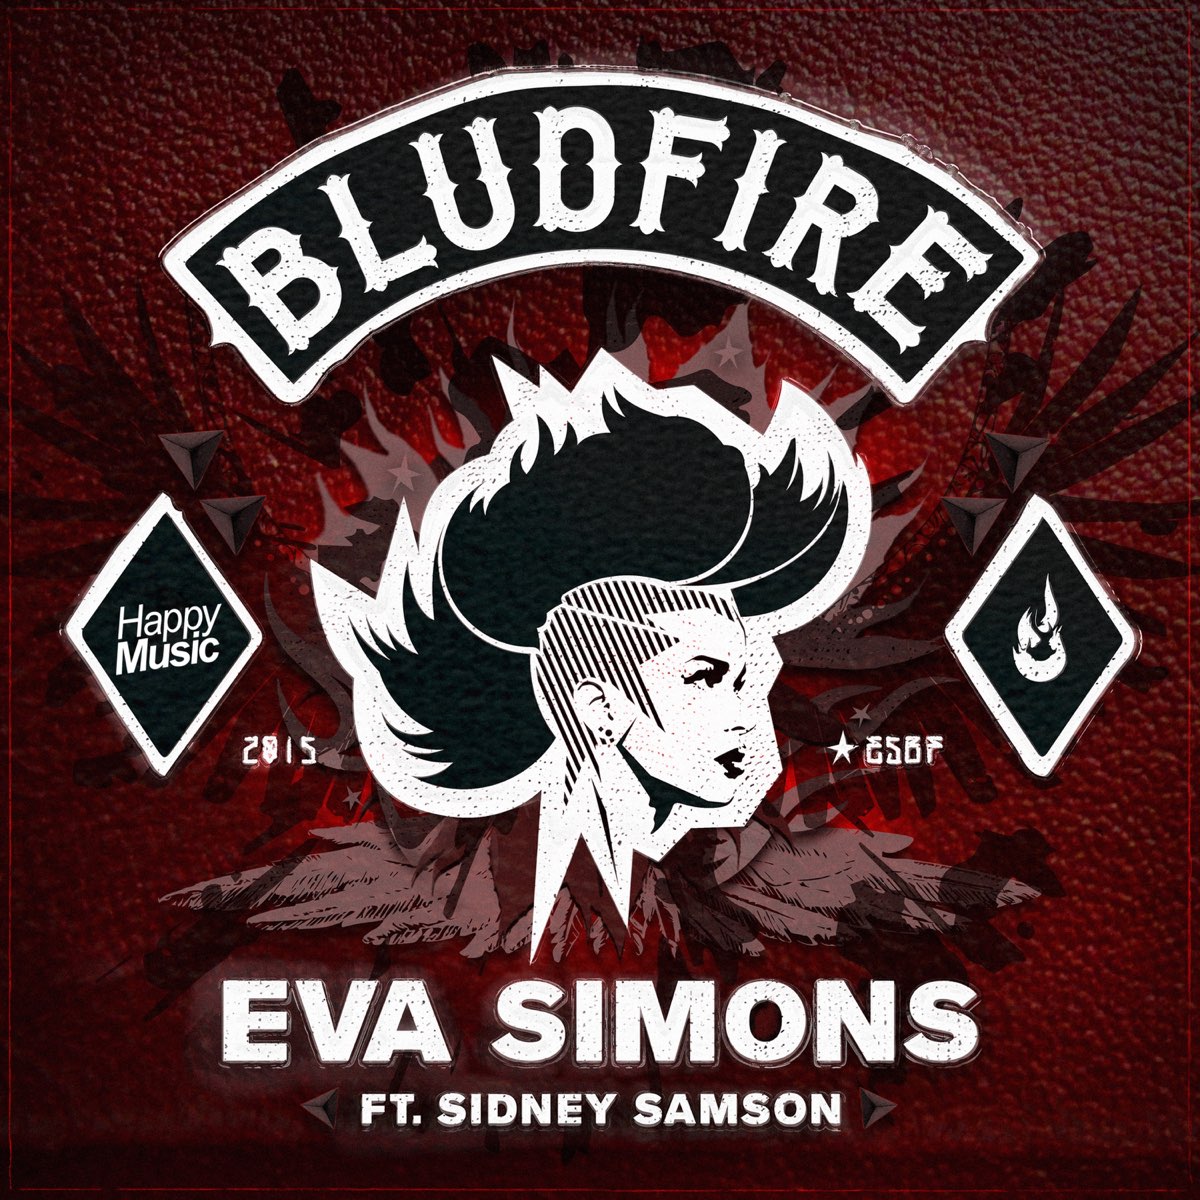 Eva Simons featuring Sidney Samson — Bludfire cover artwork